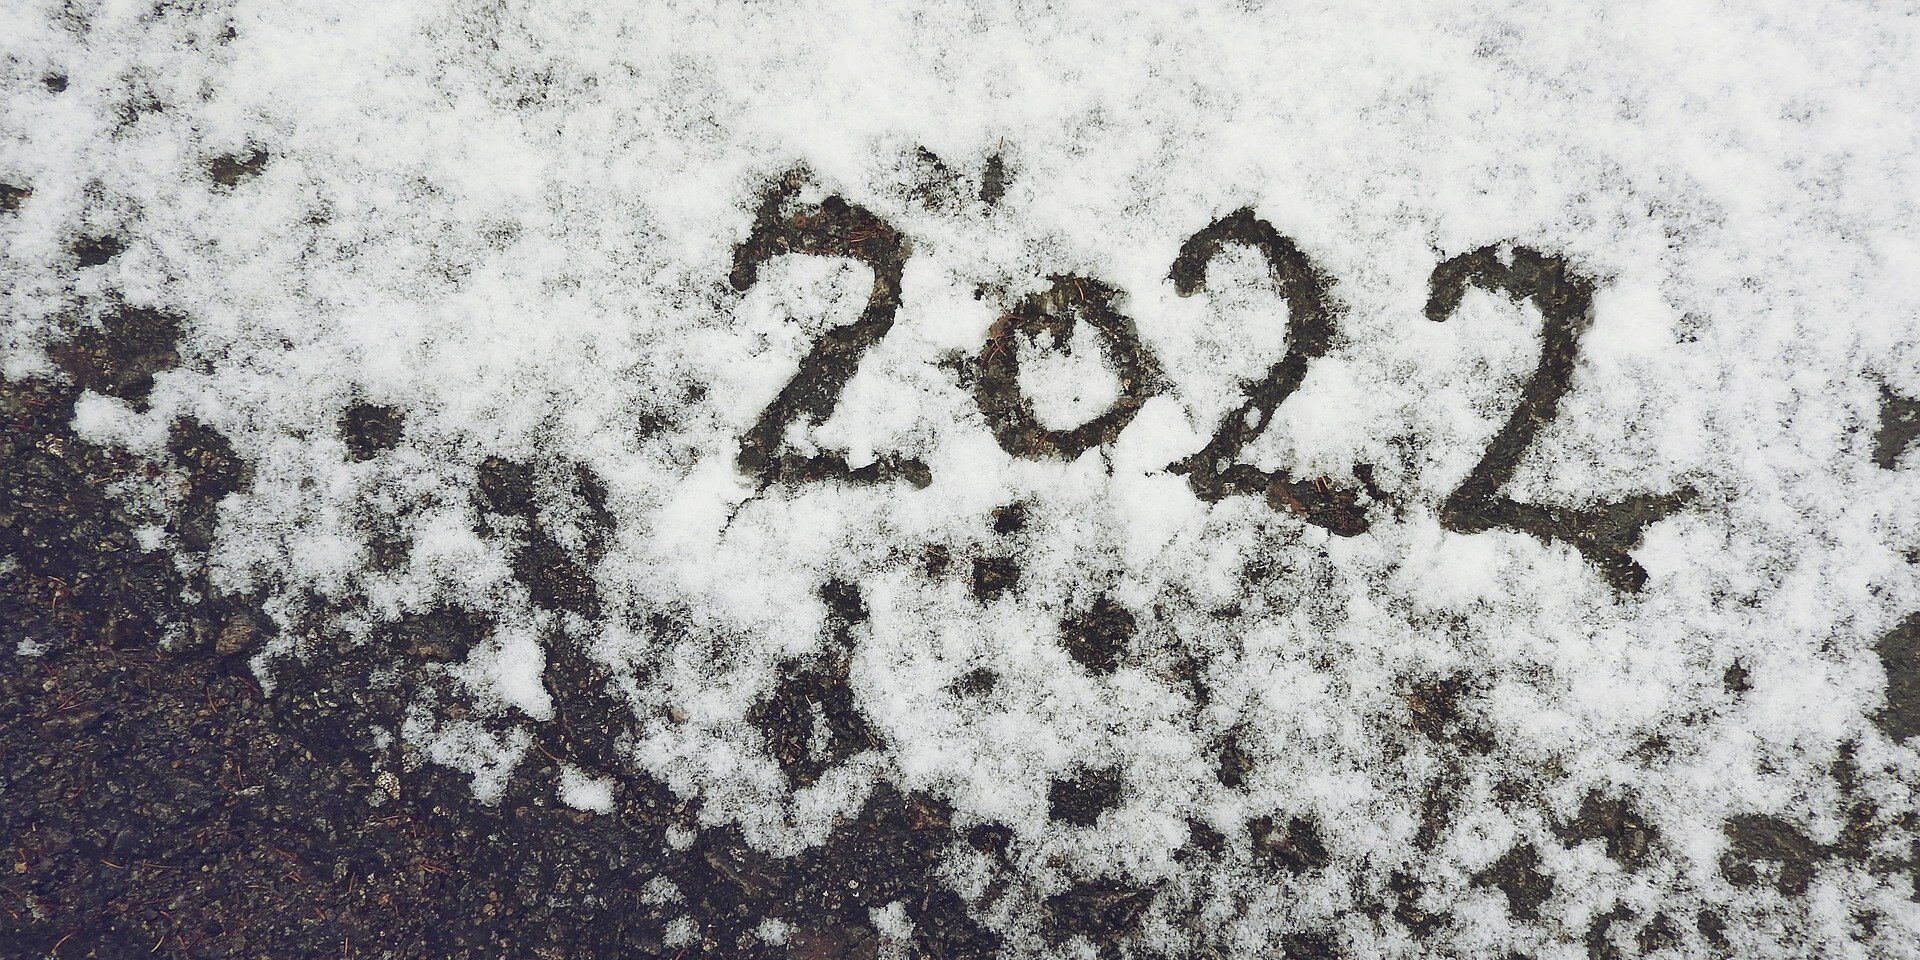 Цифры на снегу - ИноСМИ, 1920, 01.12.2021